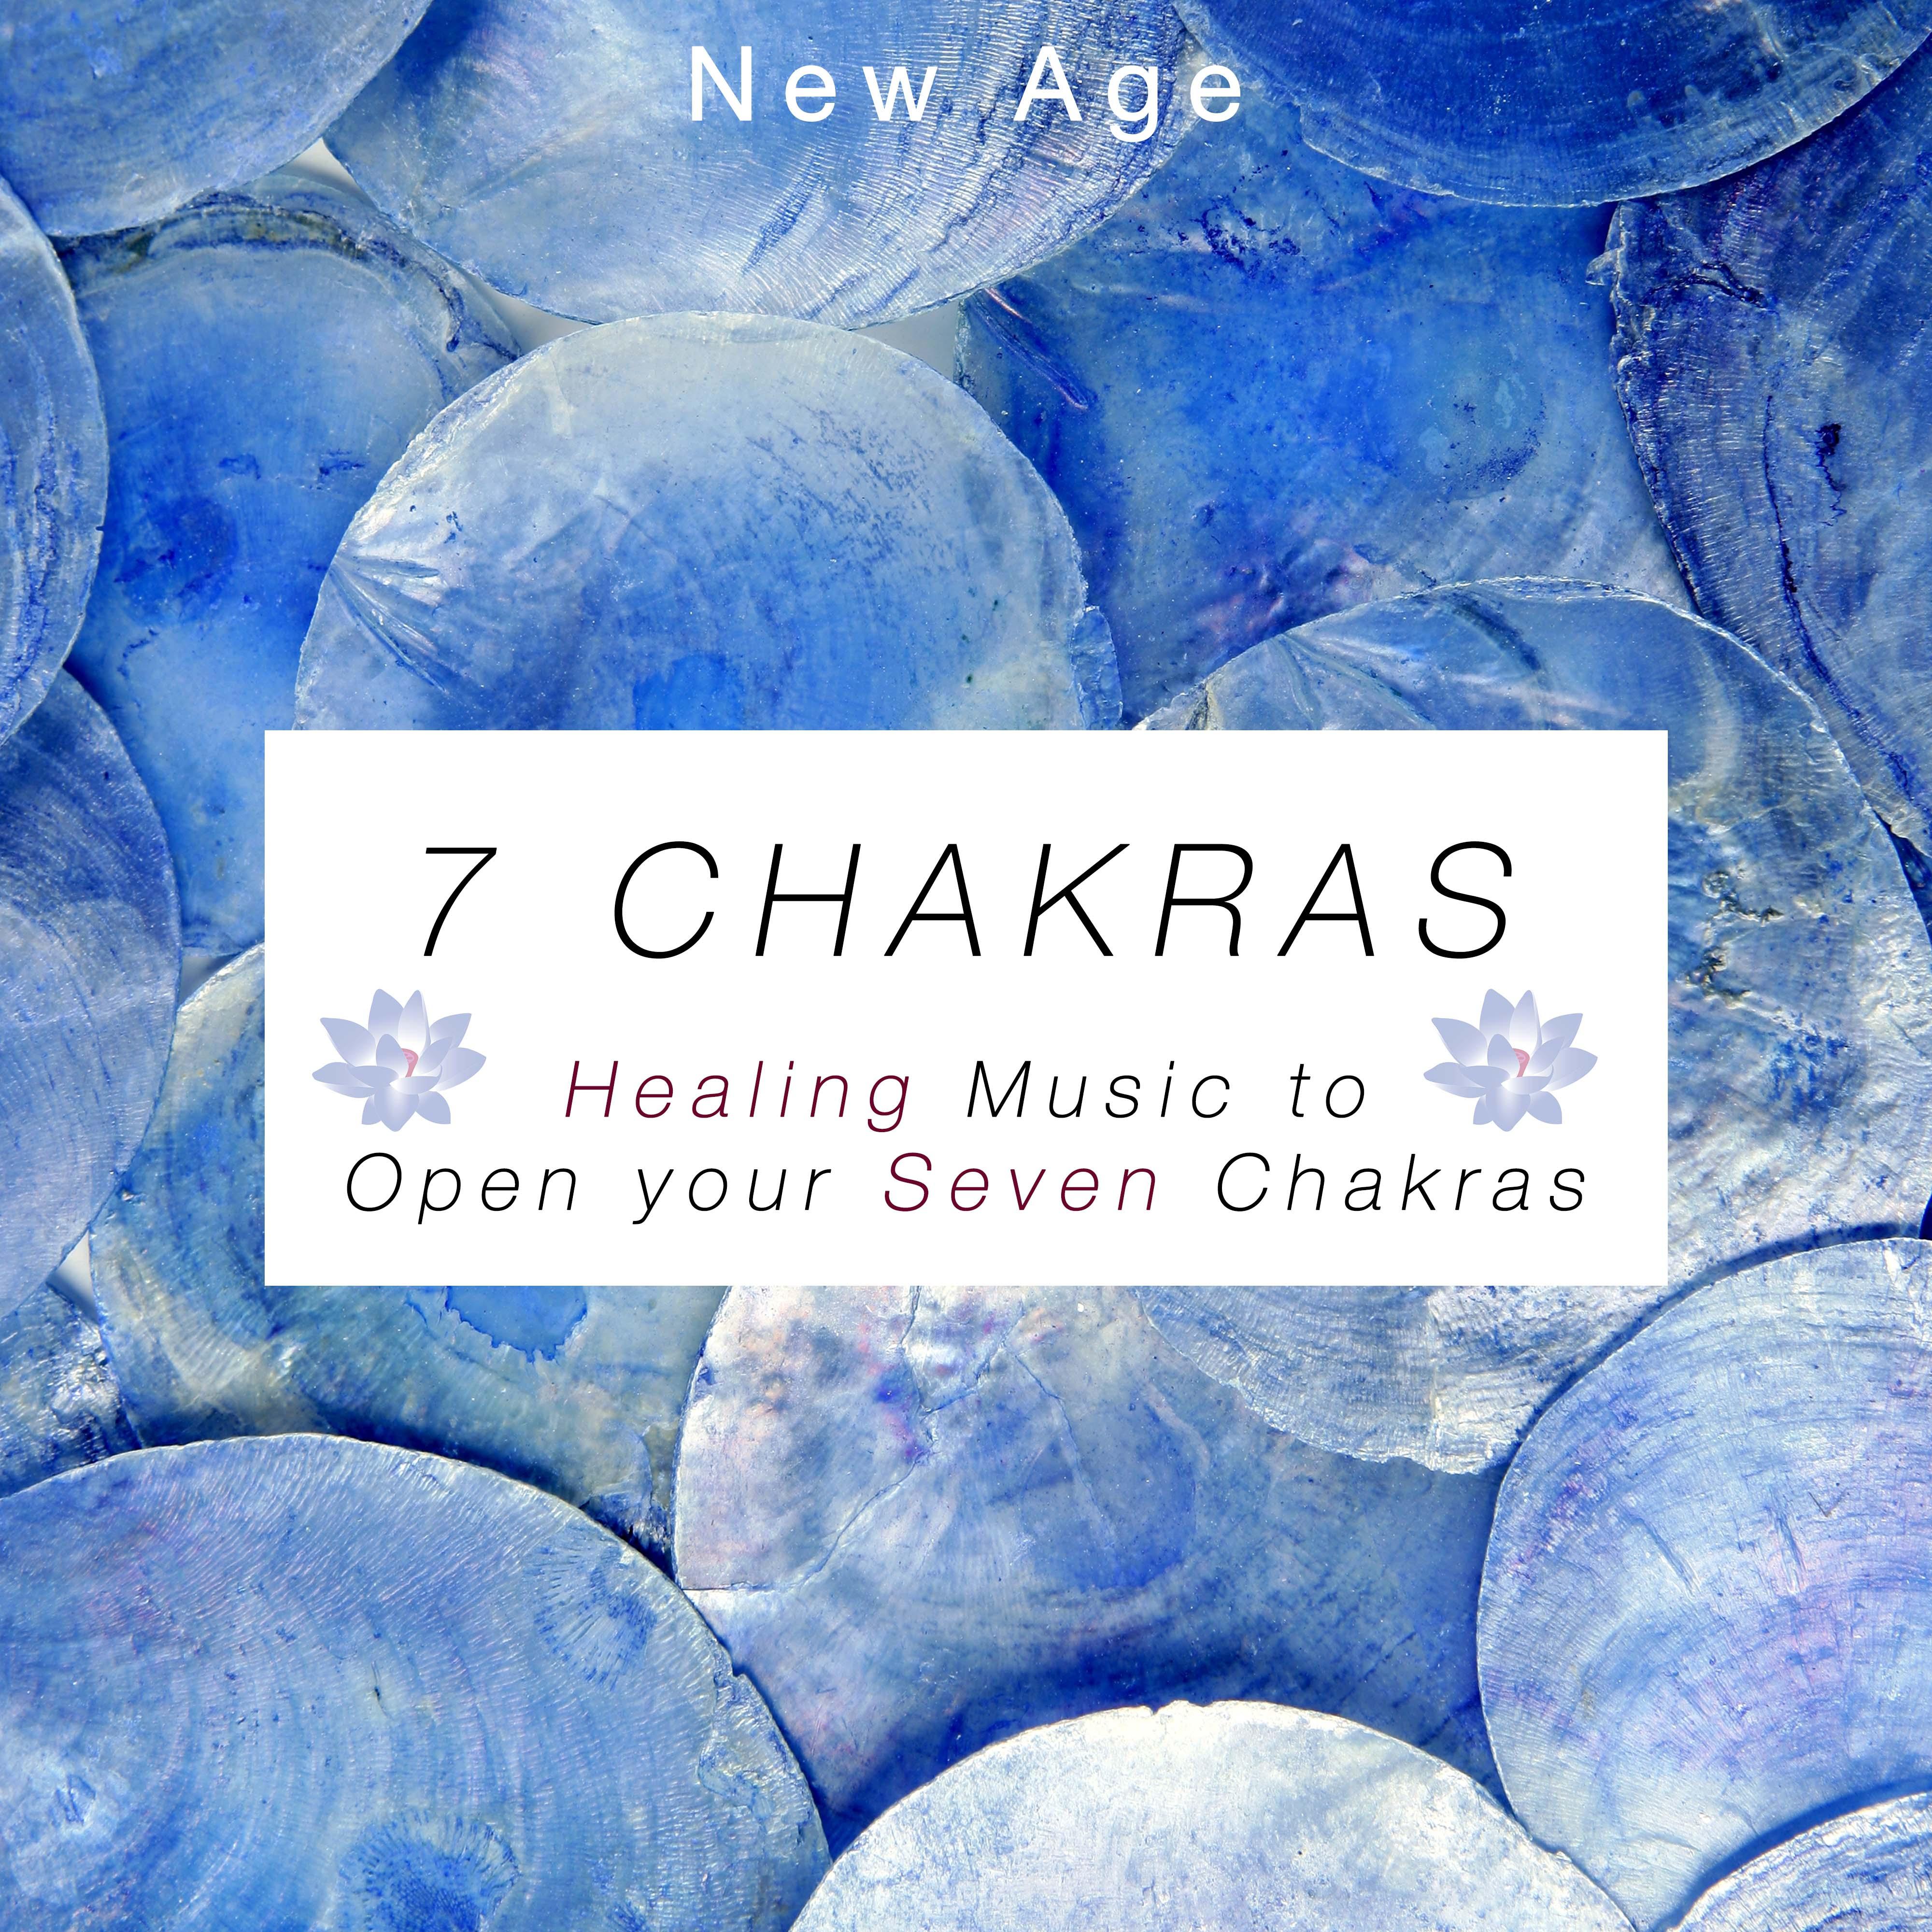 7 Chakras - Healing Music to Open your Seven Chakras